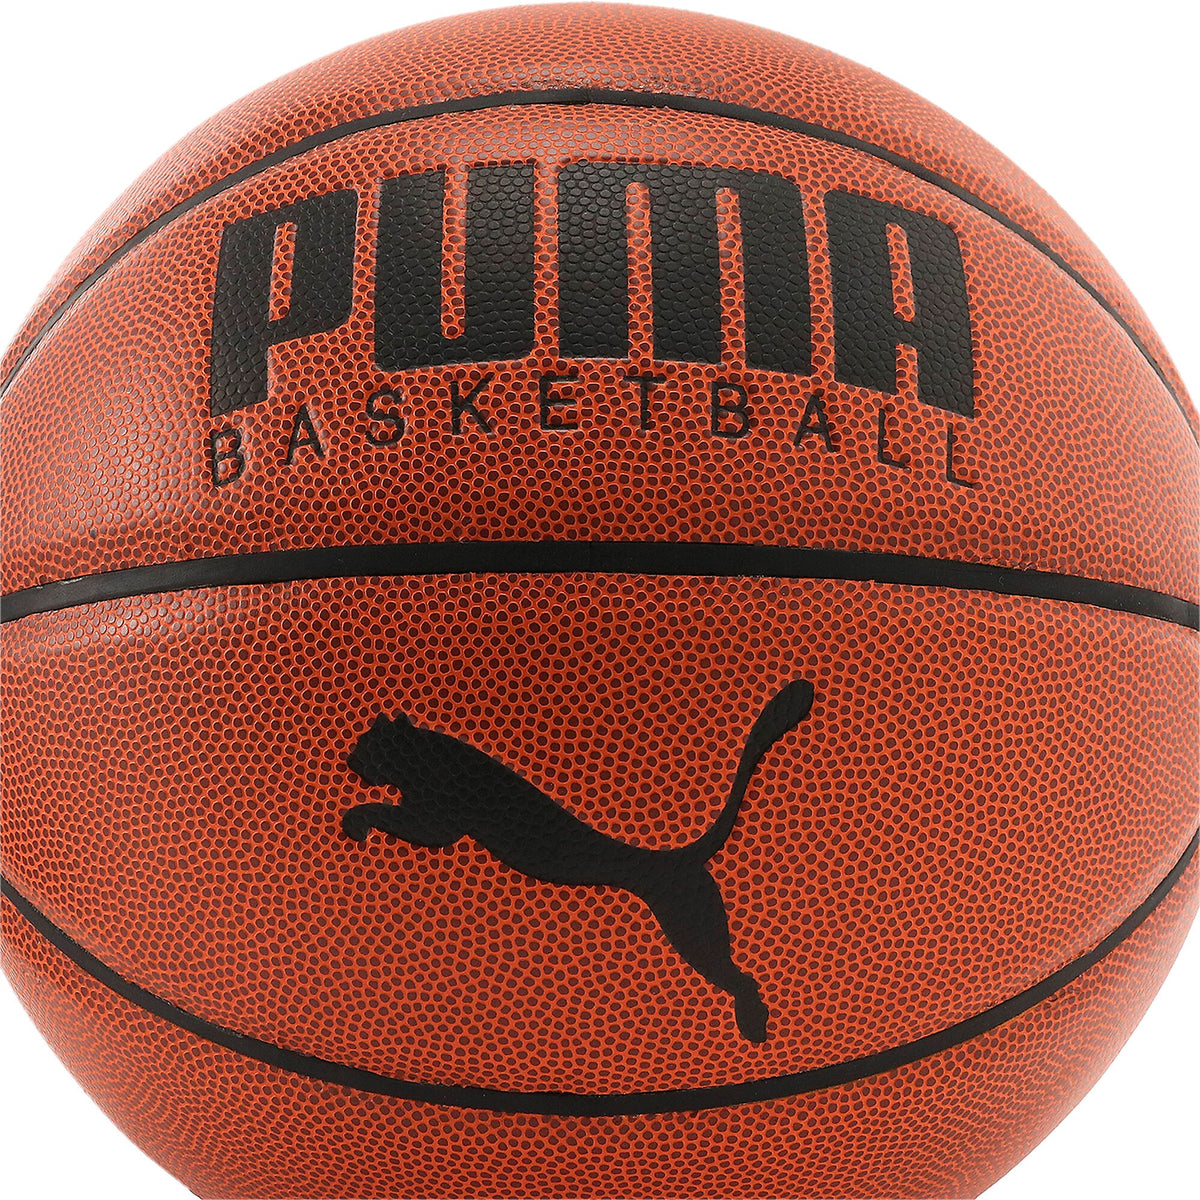 Puma Basketball Top Leather Brown